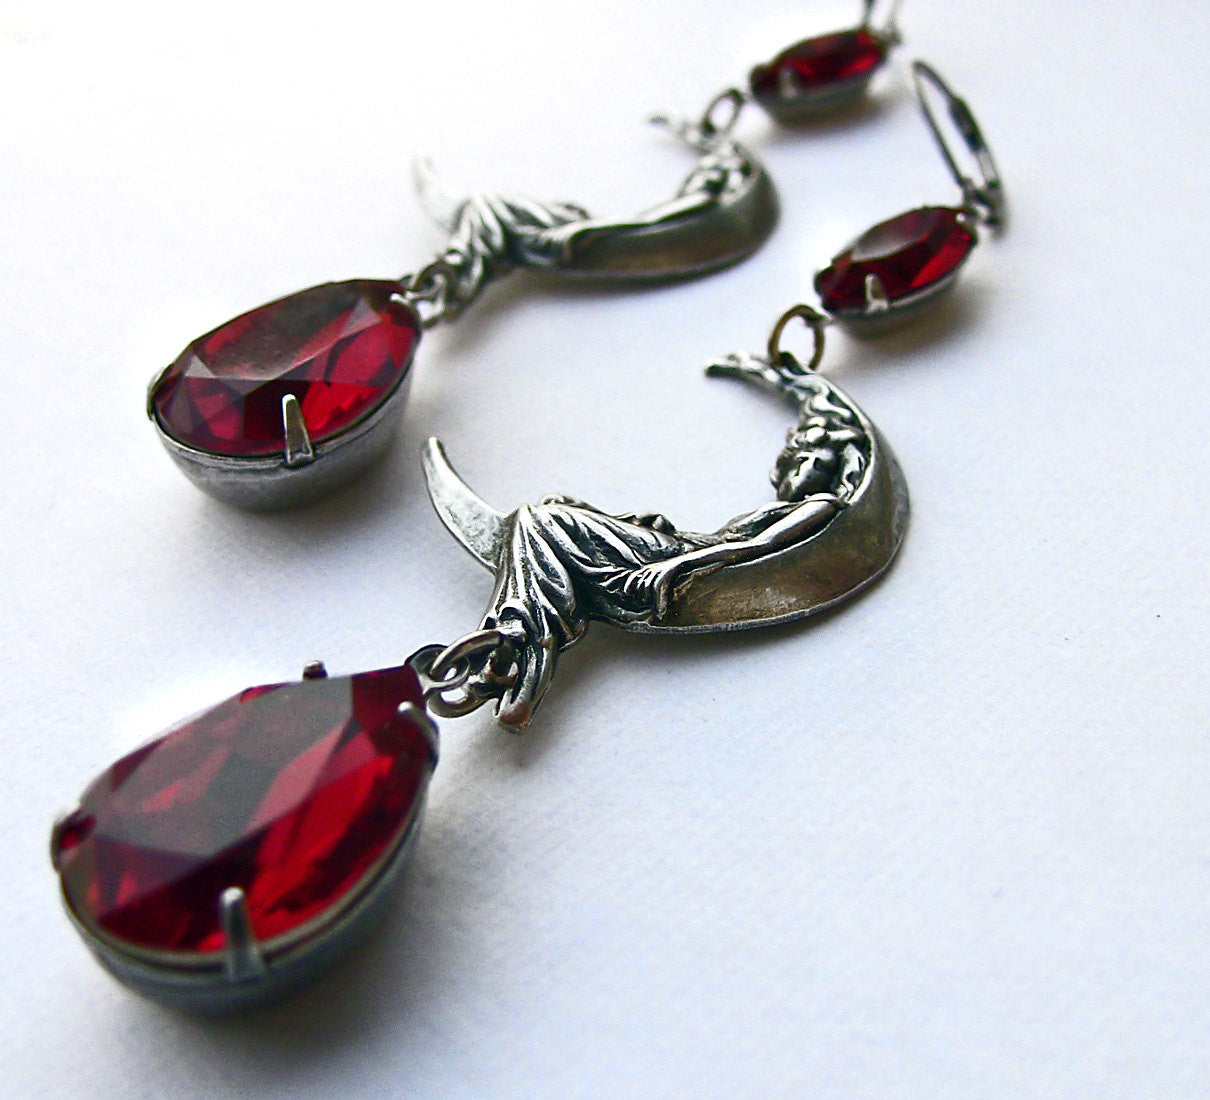 Moon Maiden Earrings with Red Swarovski crystal - Aranwen's Jewelry
 - 4